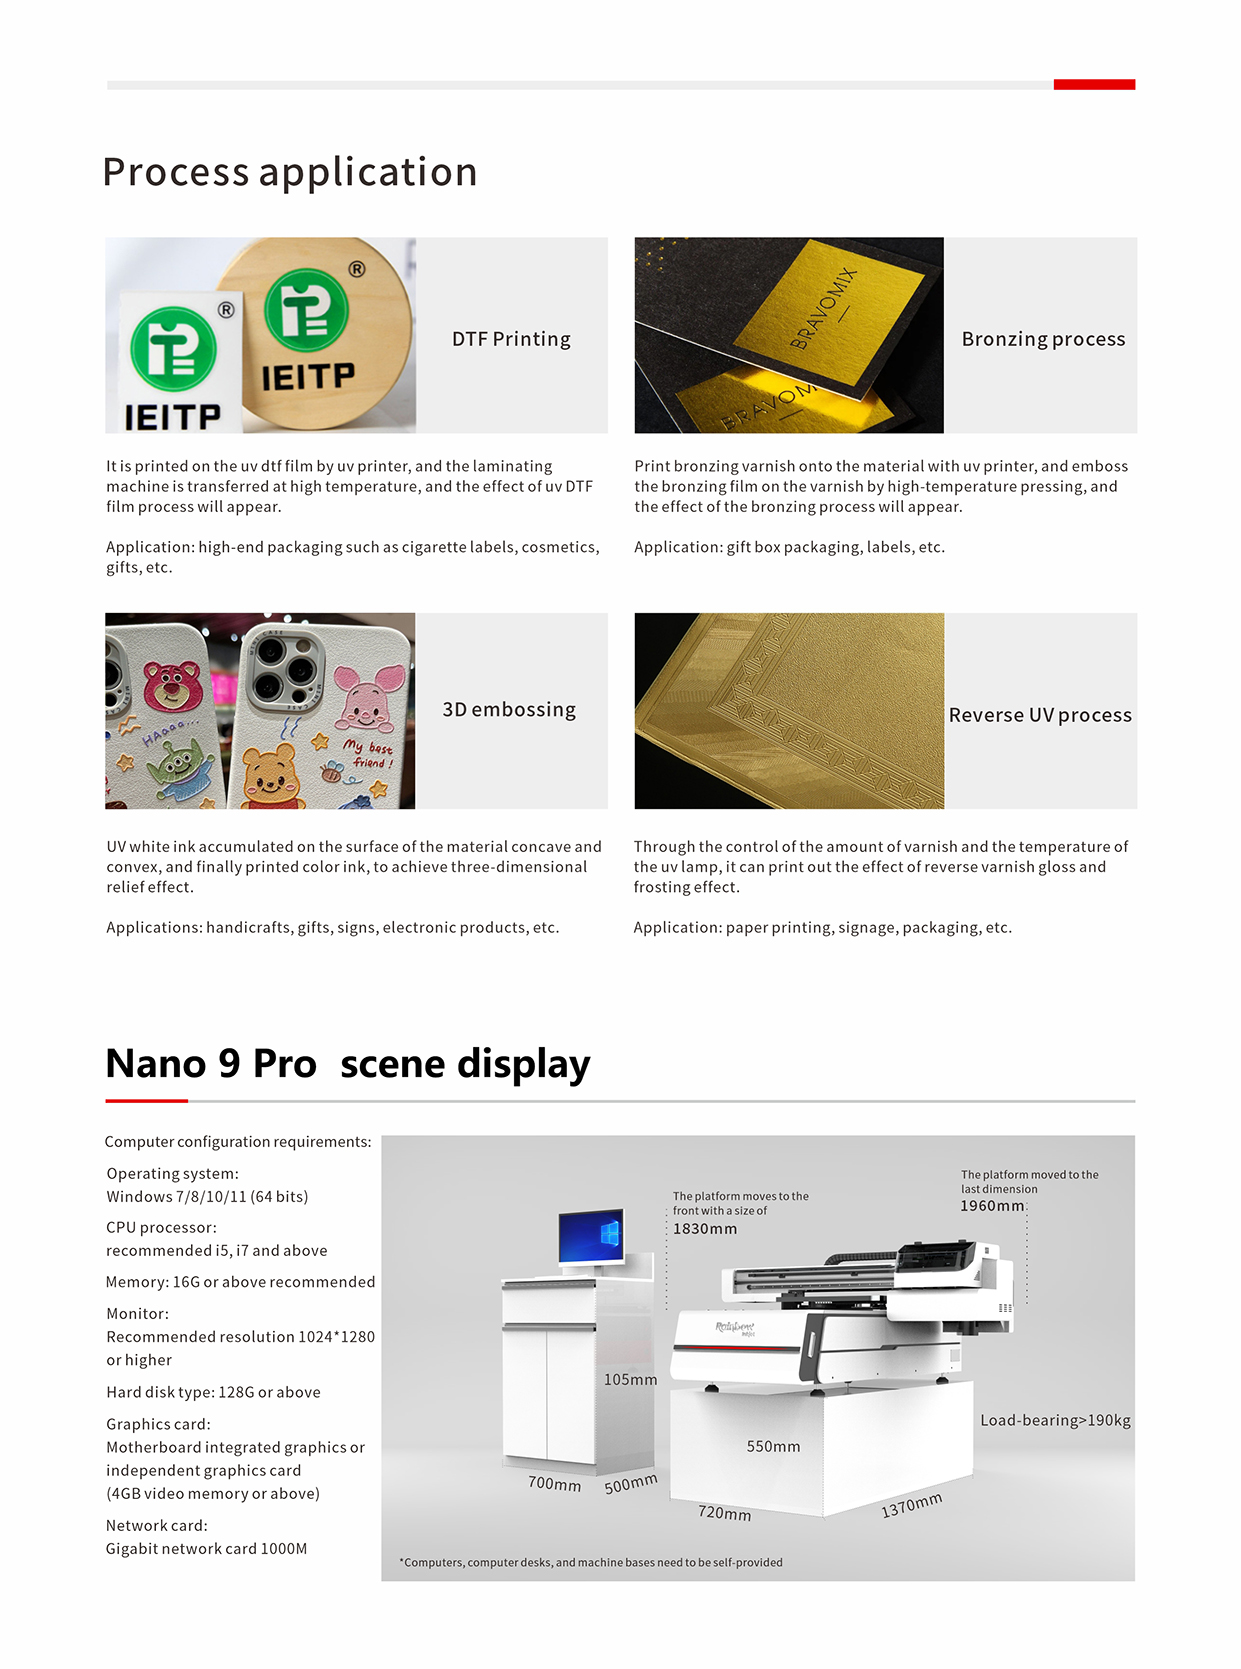 i1600 के साथ नैनो 9 प्रो यूवी फ्लैटबेड प्रिंटर (3)